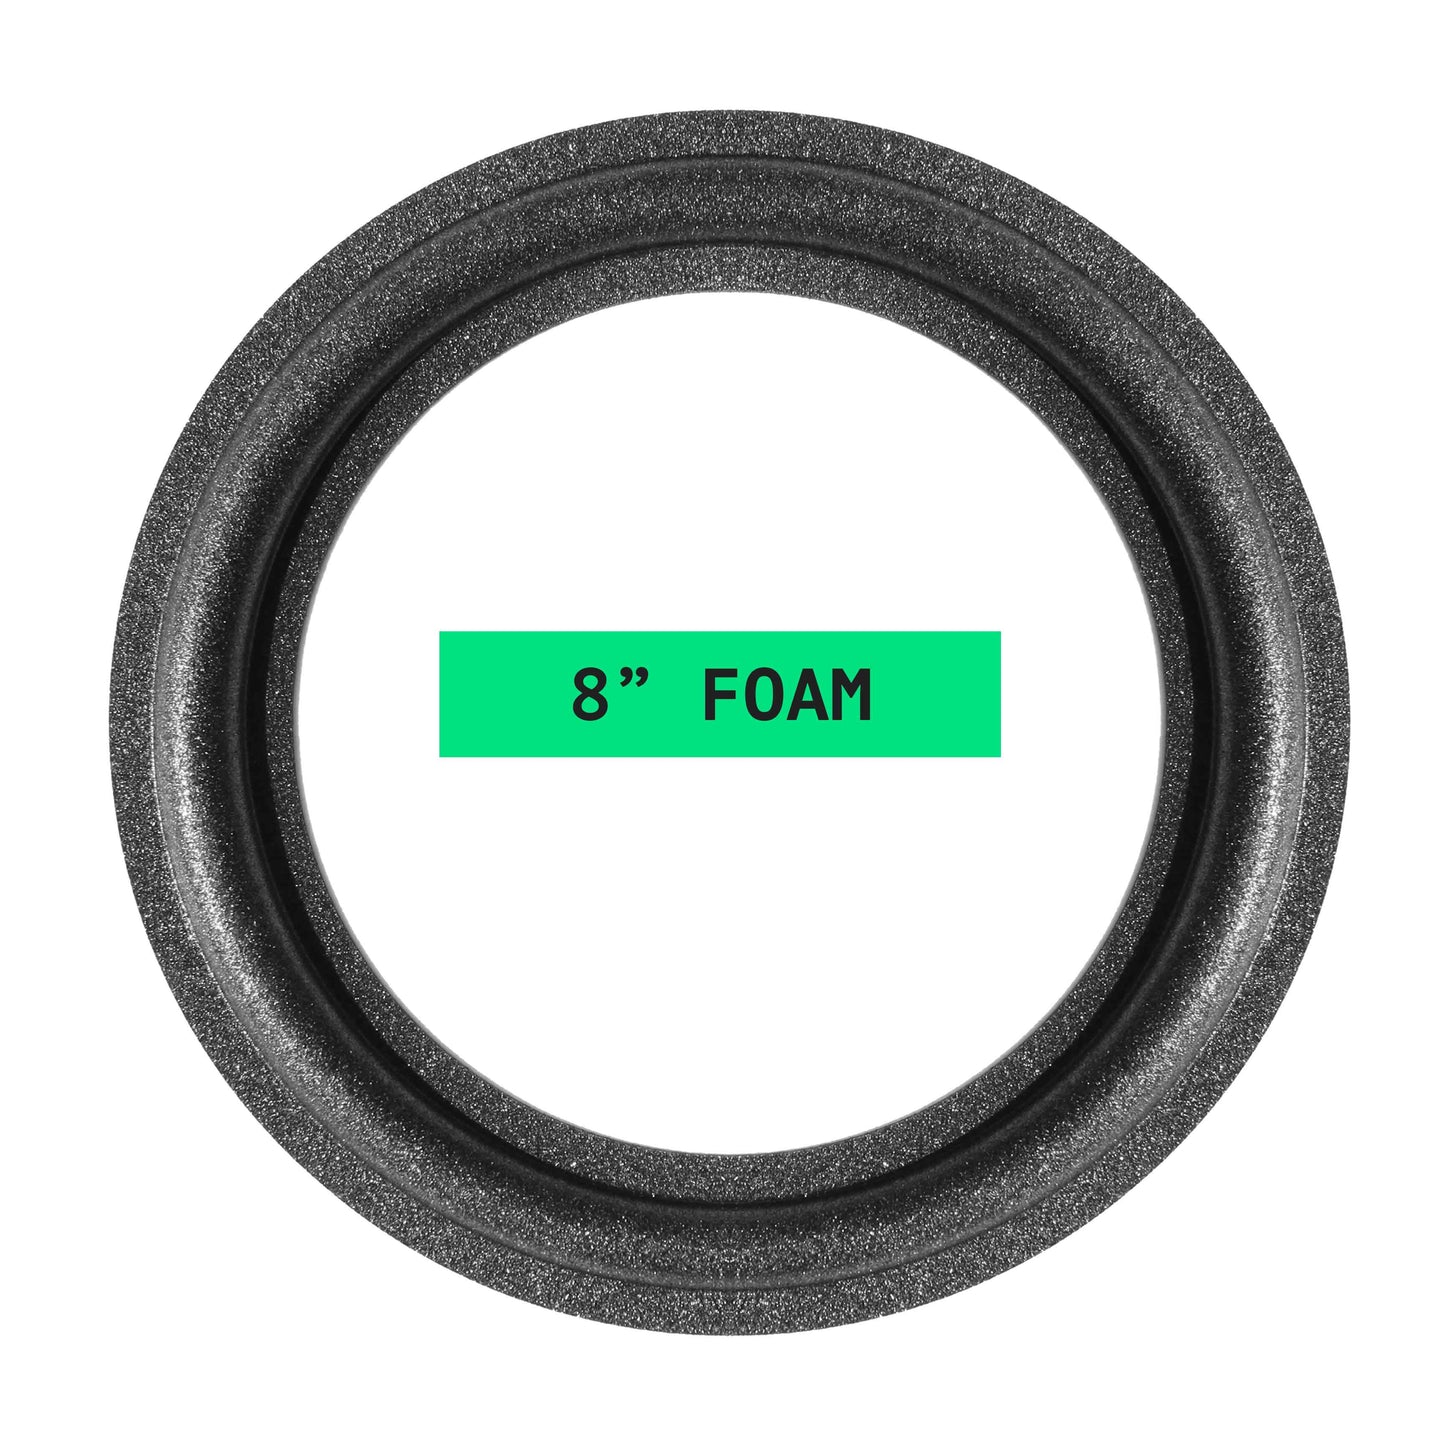 DBX SF-1000, SF-1500, Soundfield Five 8" Foam Repair Kit